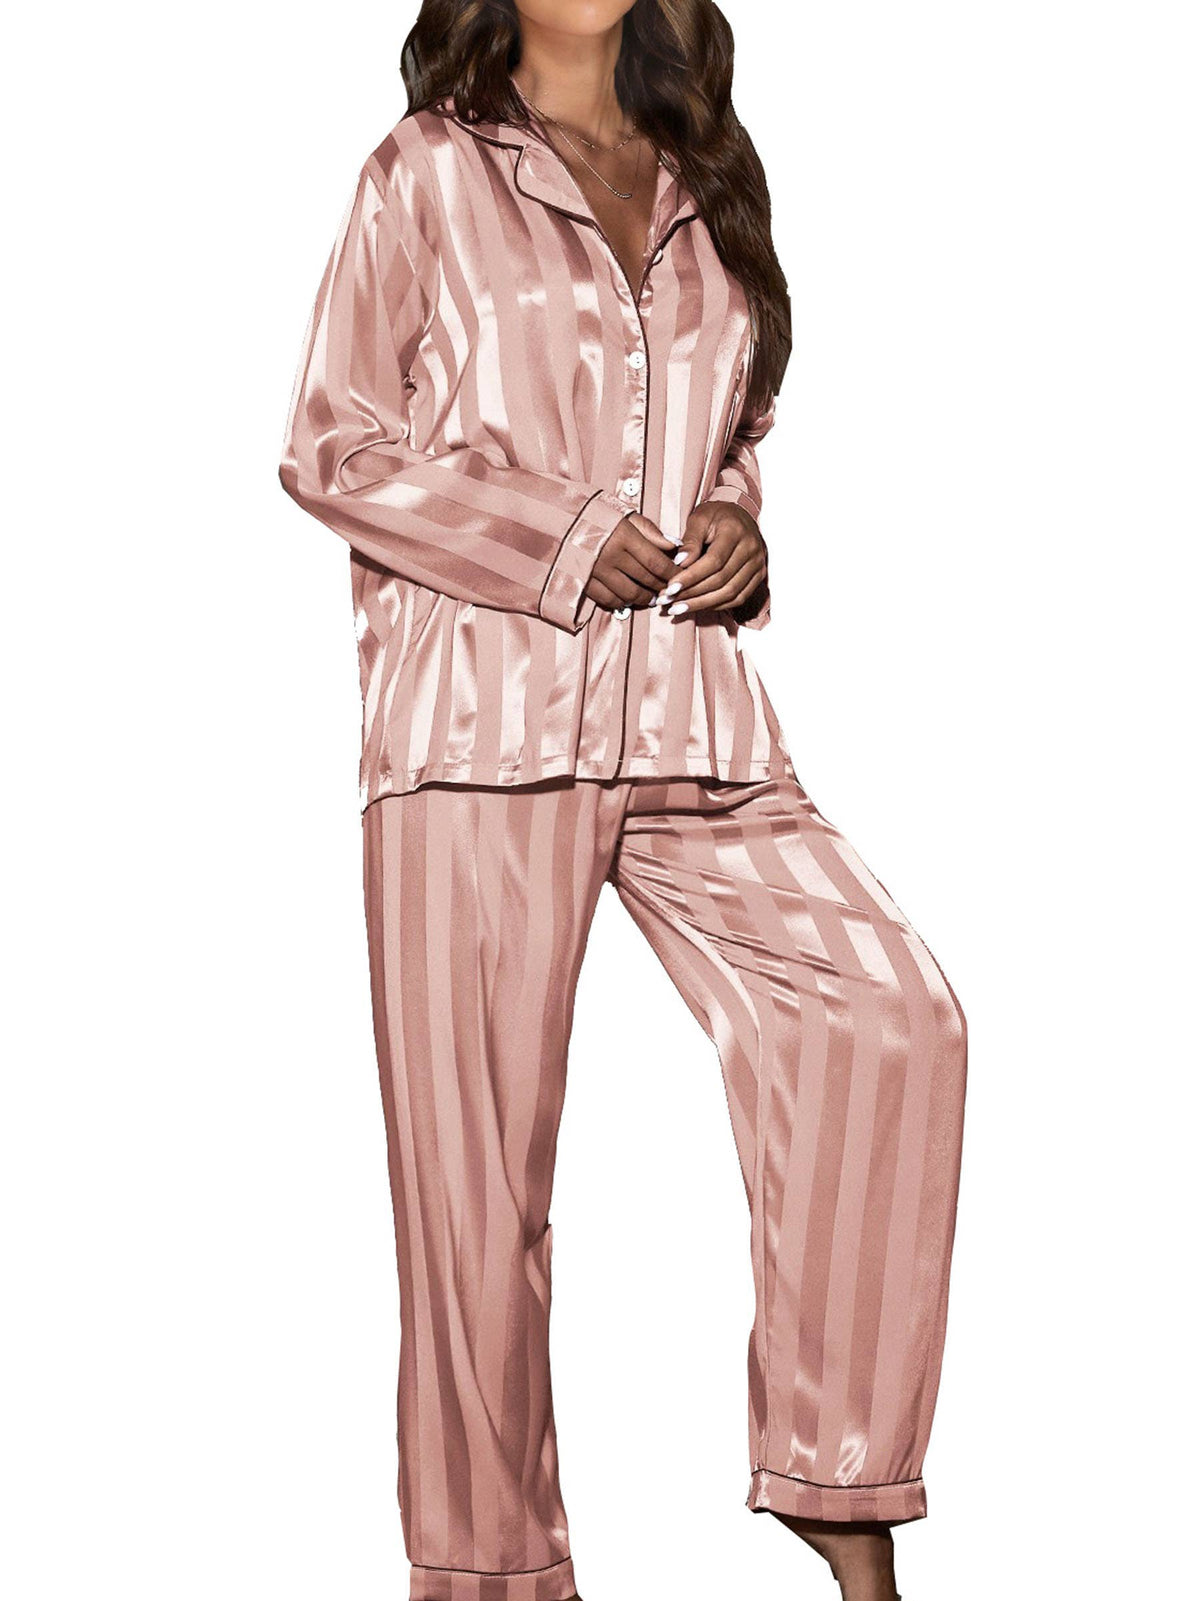 2 Piece Button Front Sleepwear Pants Set Loungewear: XL / Pink